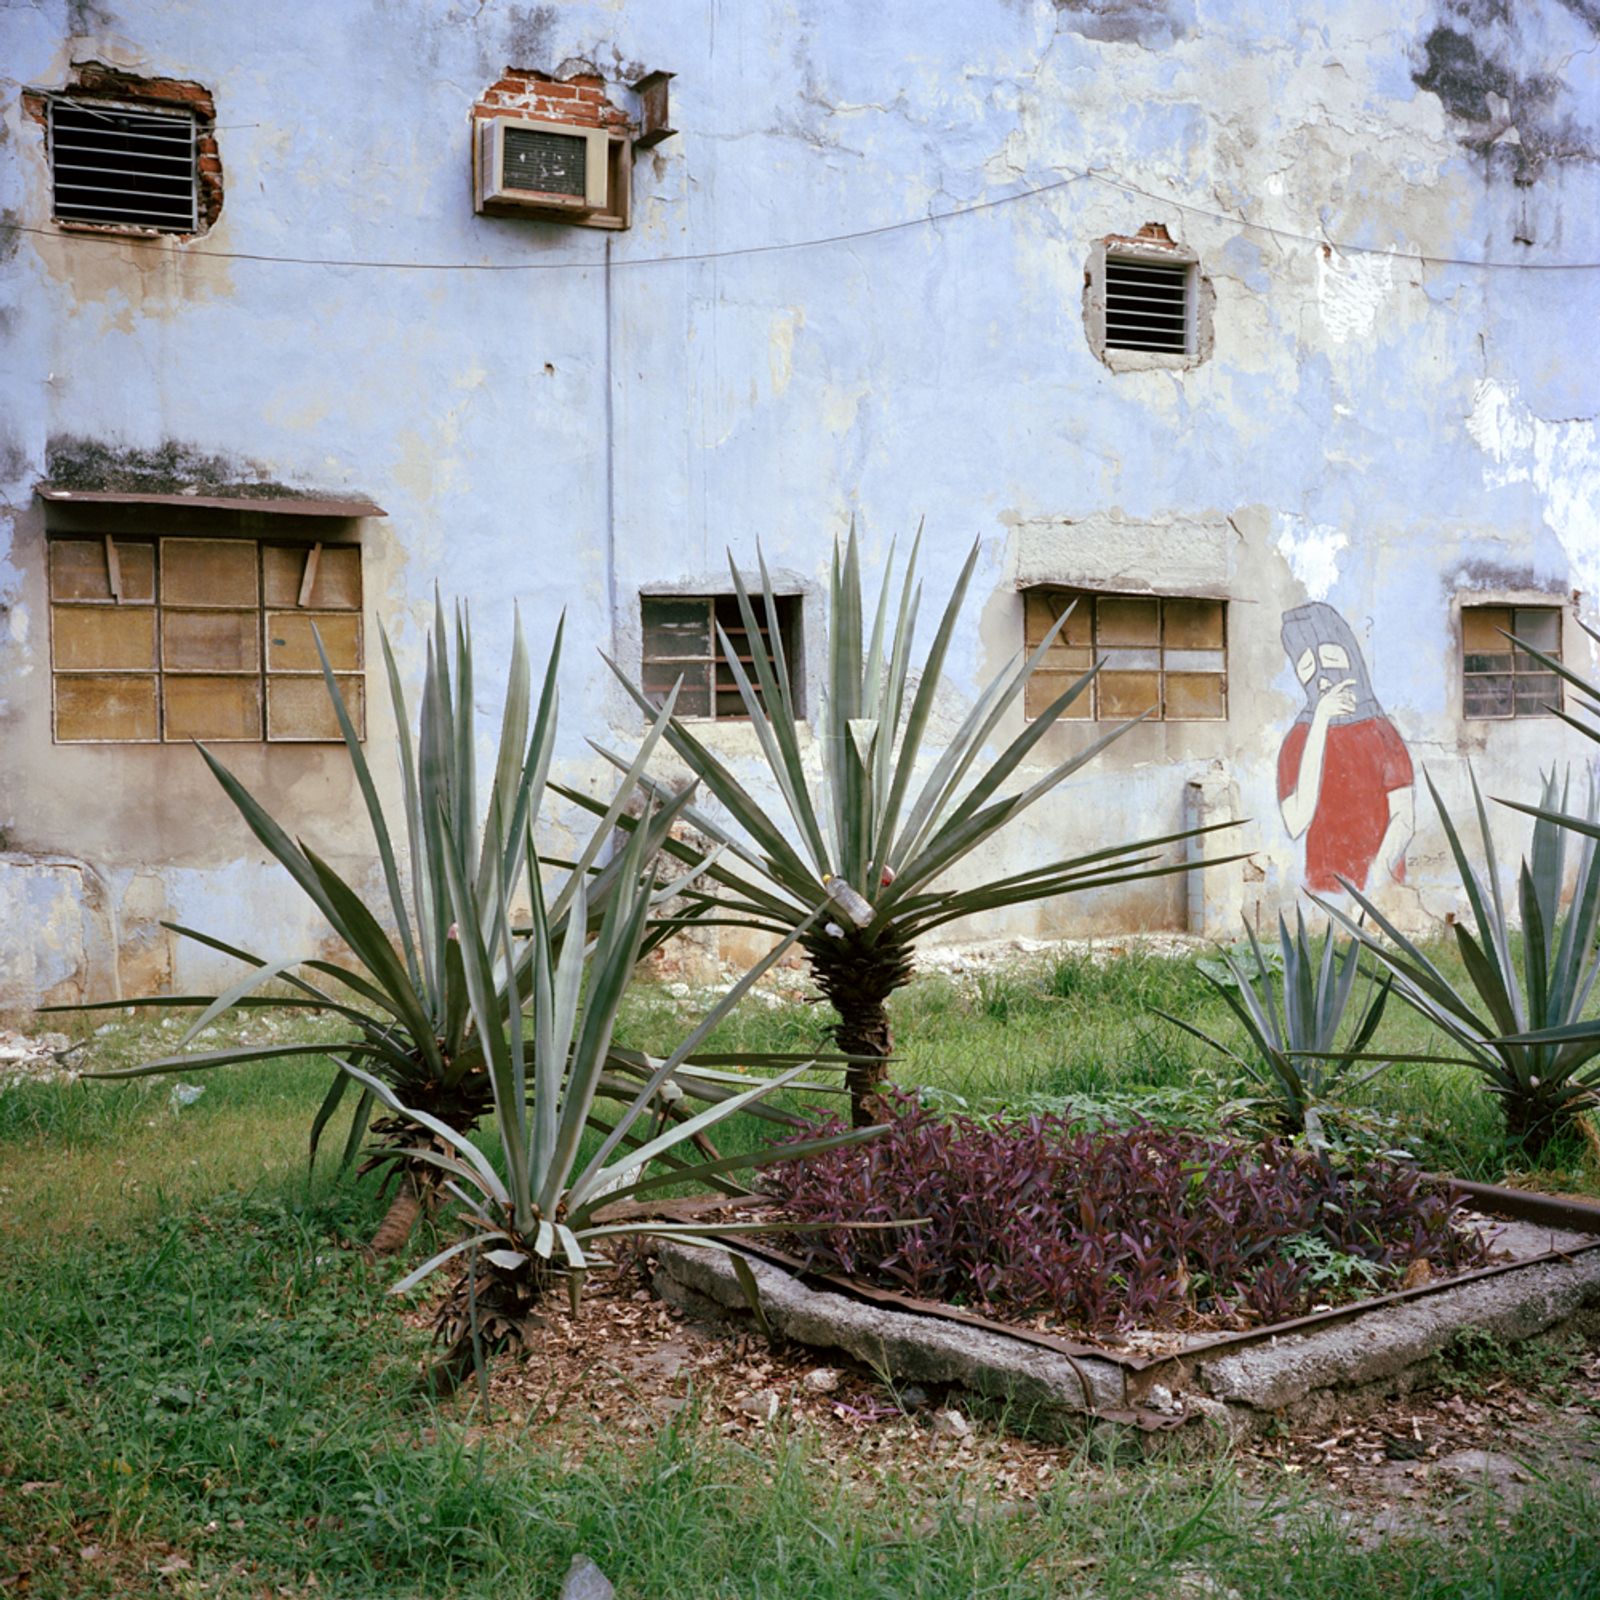 © Michael Vince Kim - Henequen plants growing in Havana. Early Korean immigrants to Cuba labored hard on henequen plantations. Havana, Cuba. 2016.